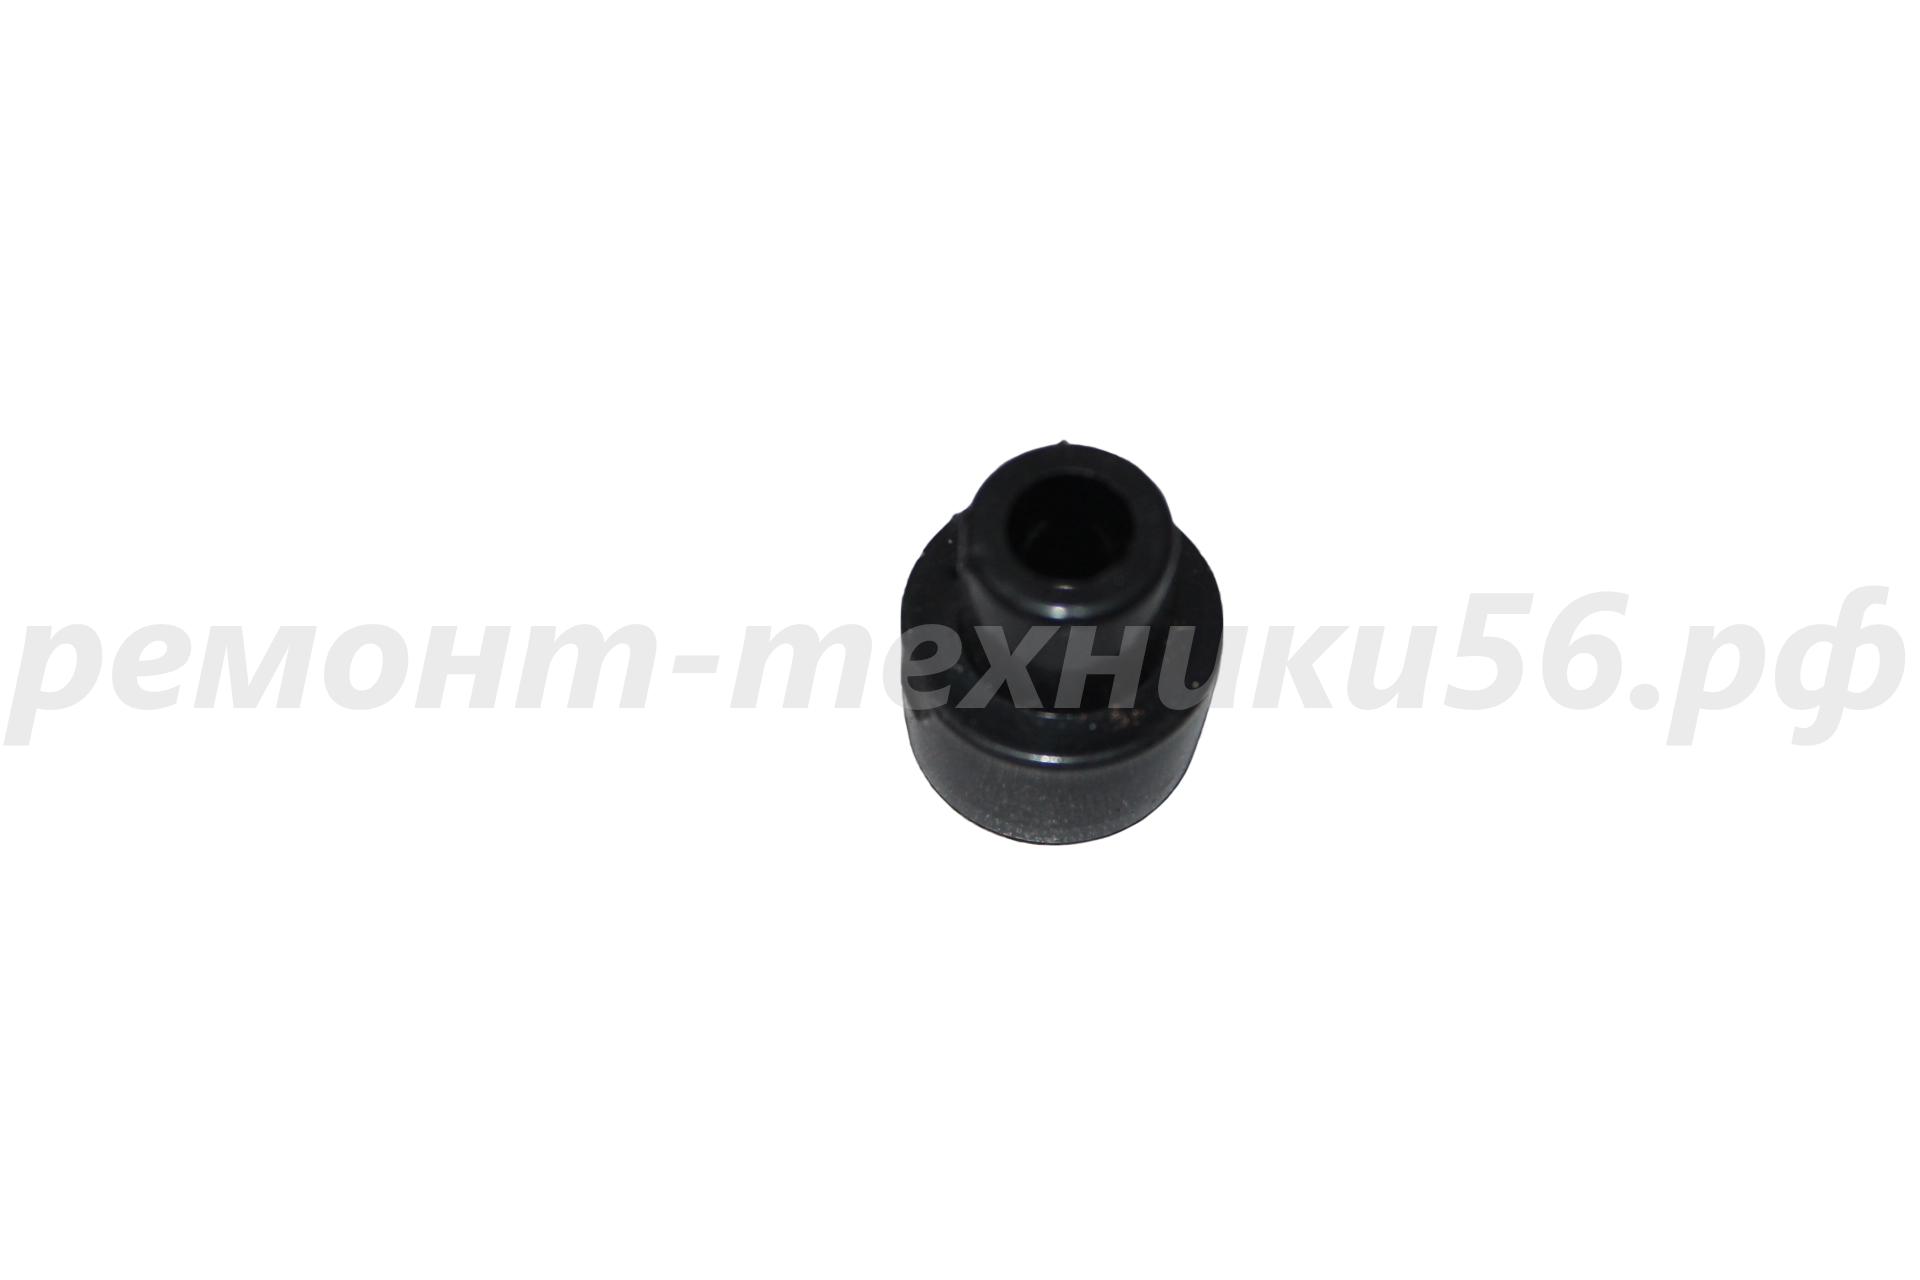 Втулка ЮМГИ 713 143 005 для мясорубки M12 Аксион - широкий ассортимент фото1